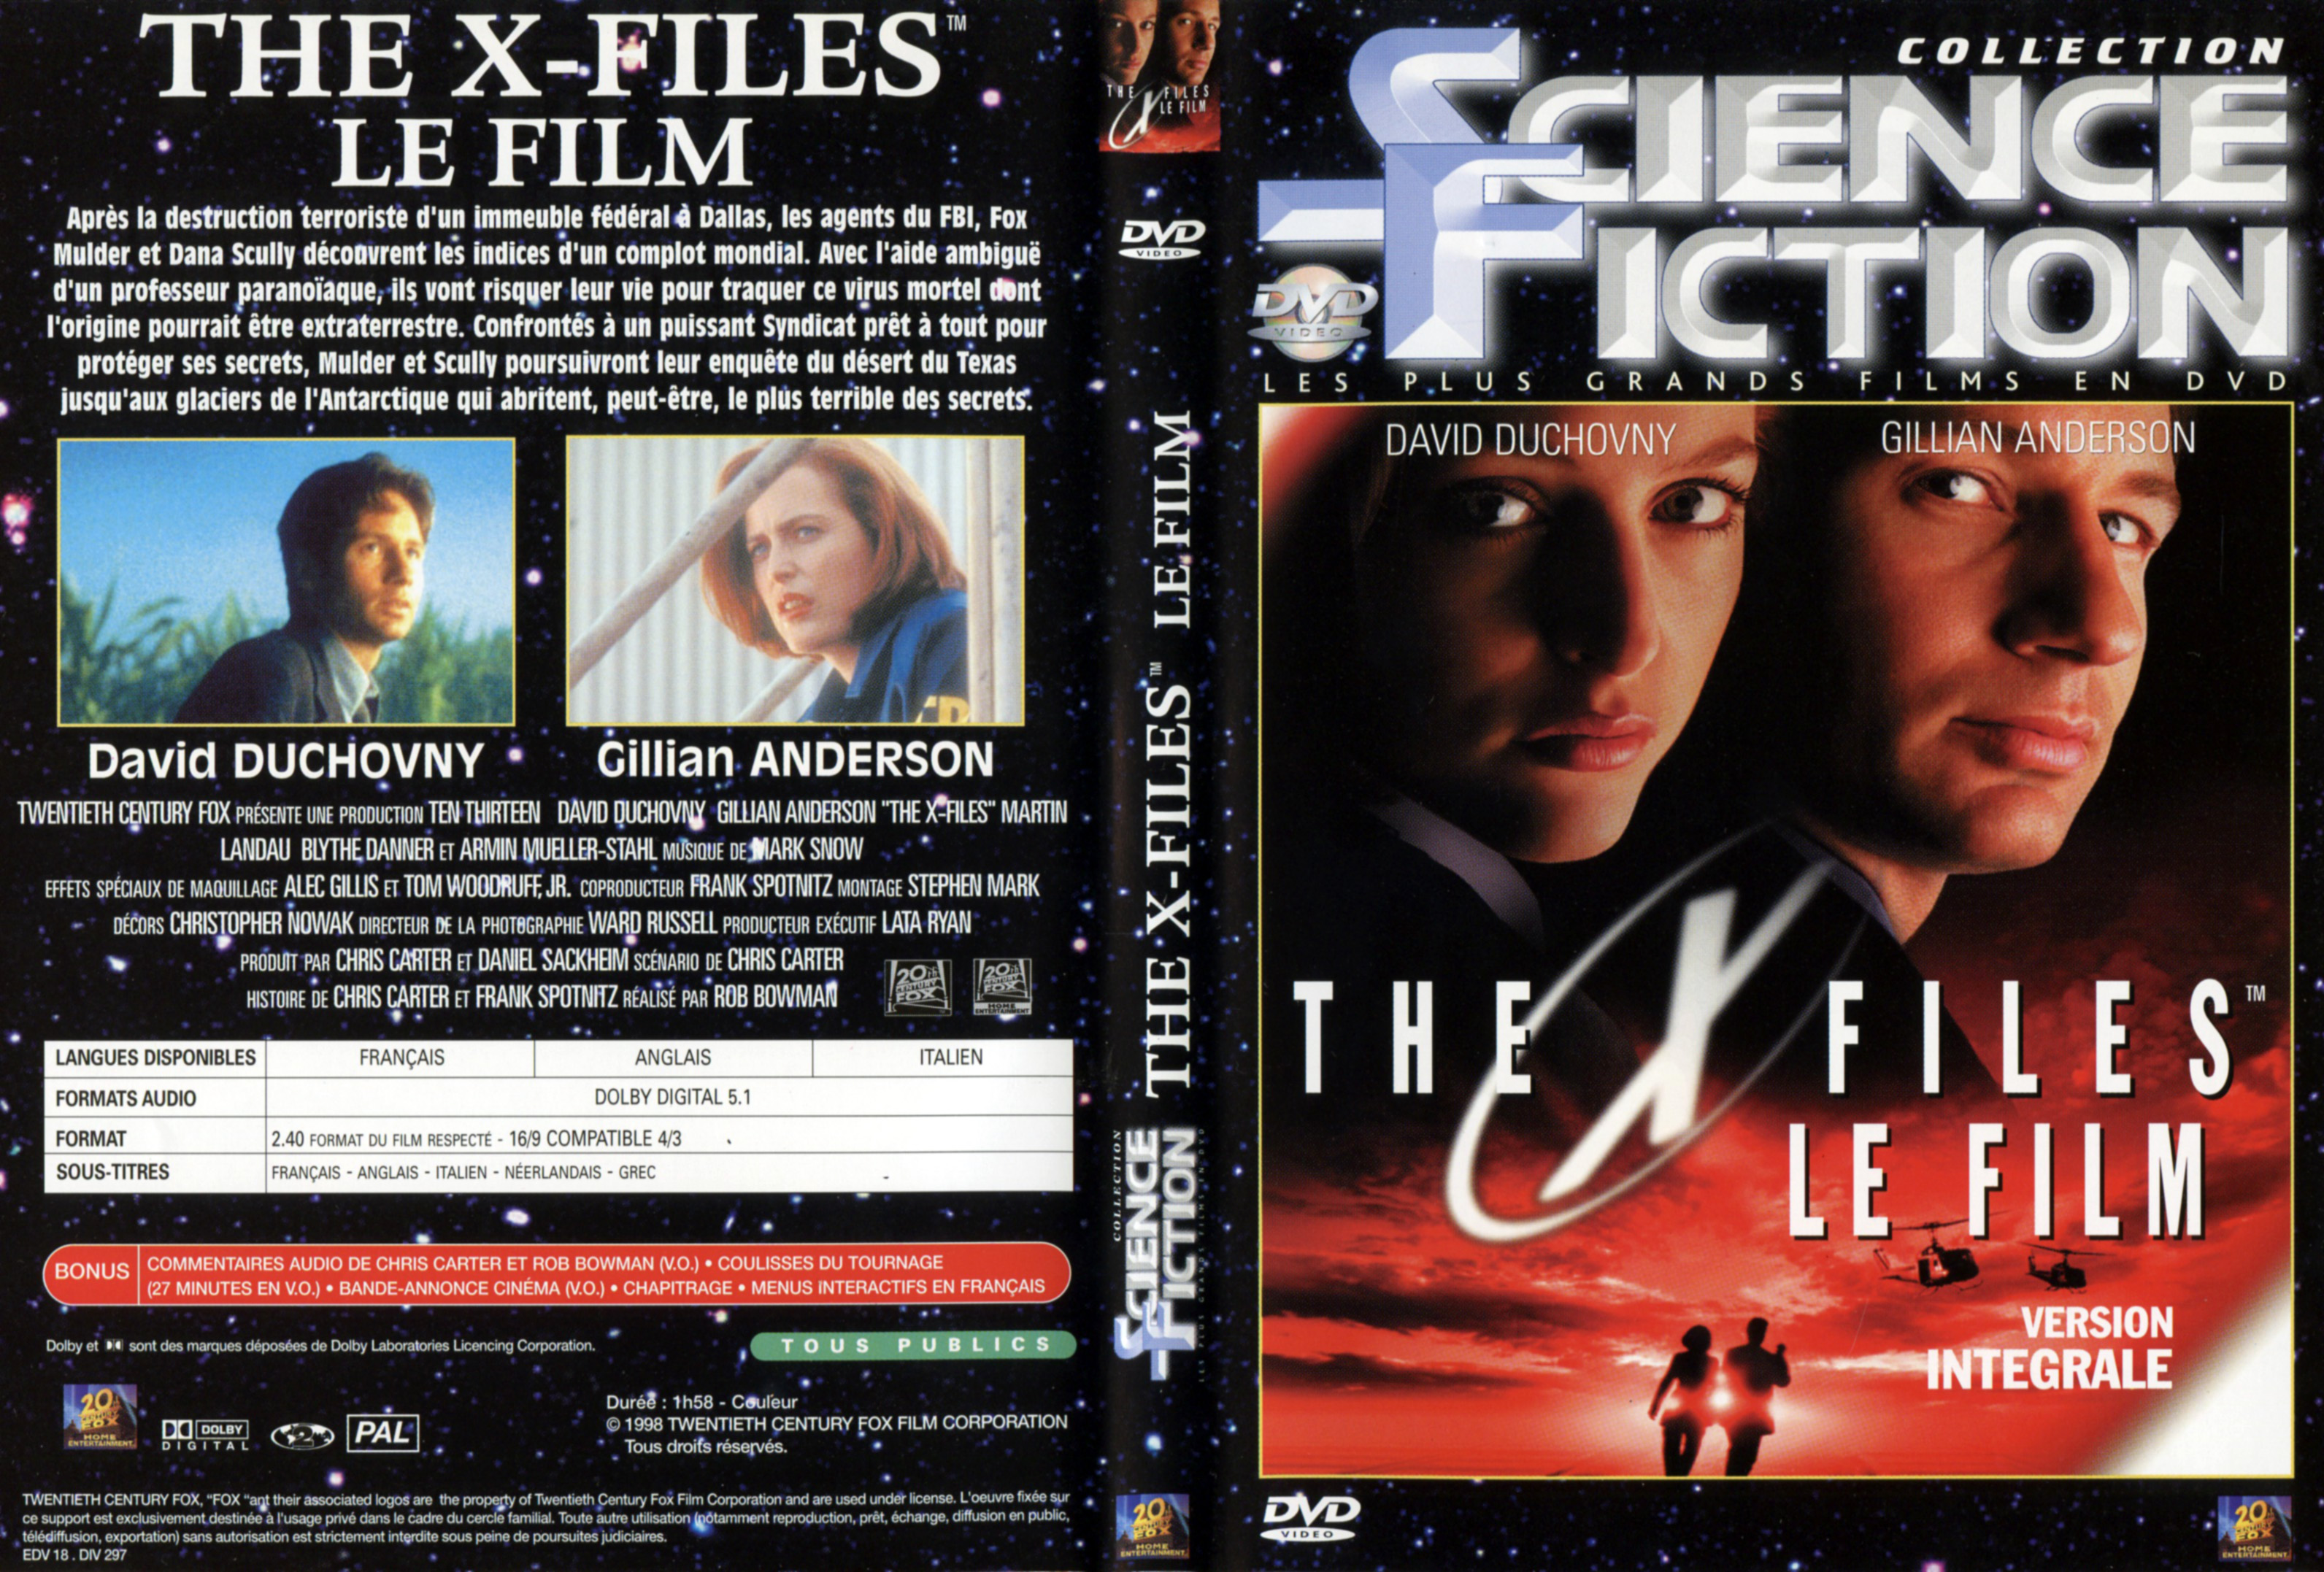 Jaquette DVD X Files Le film v2